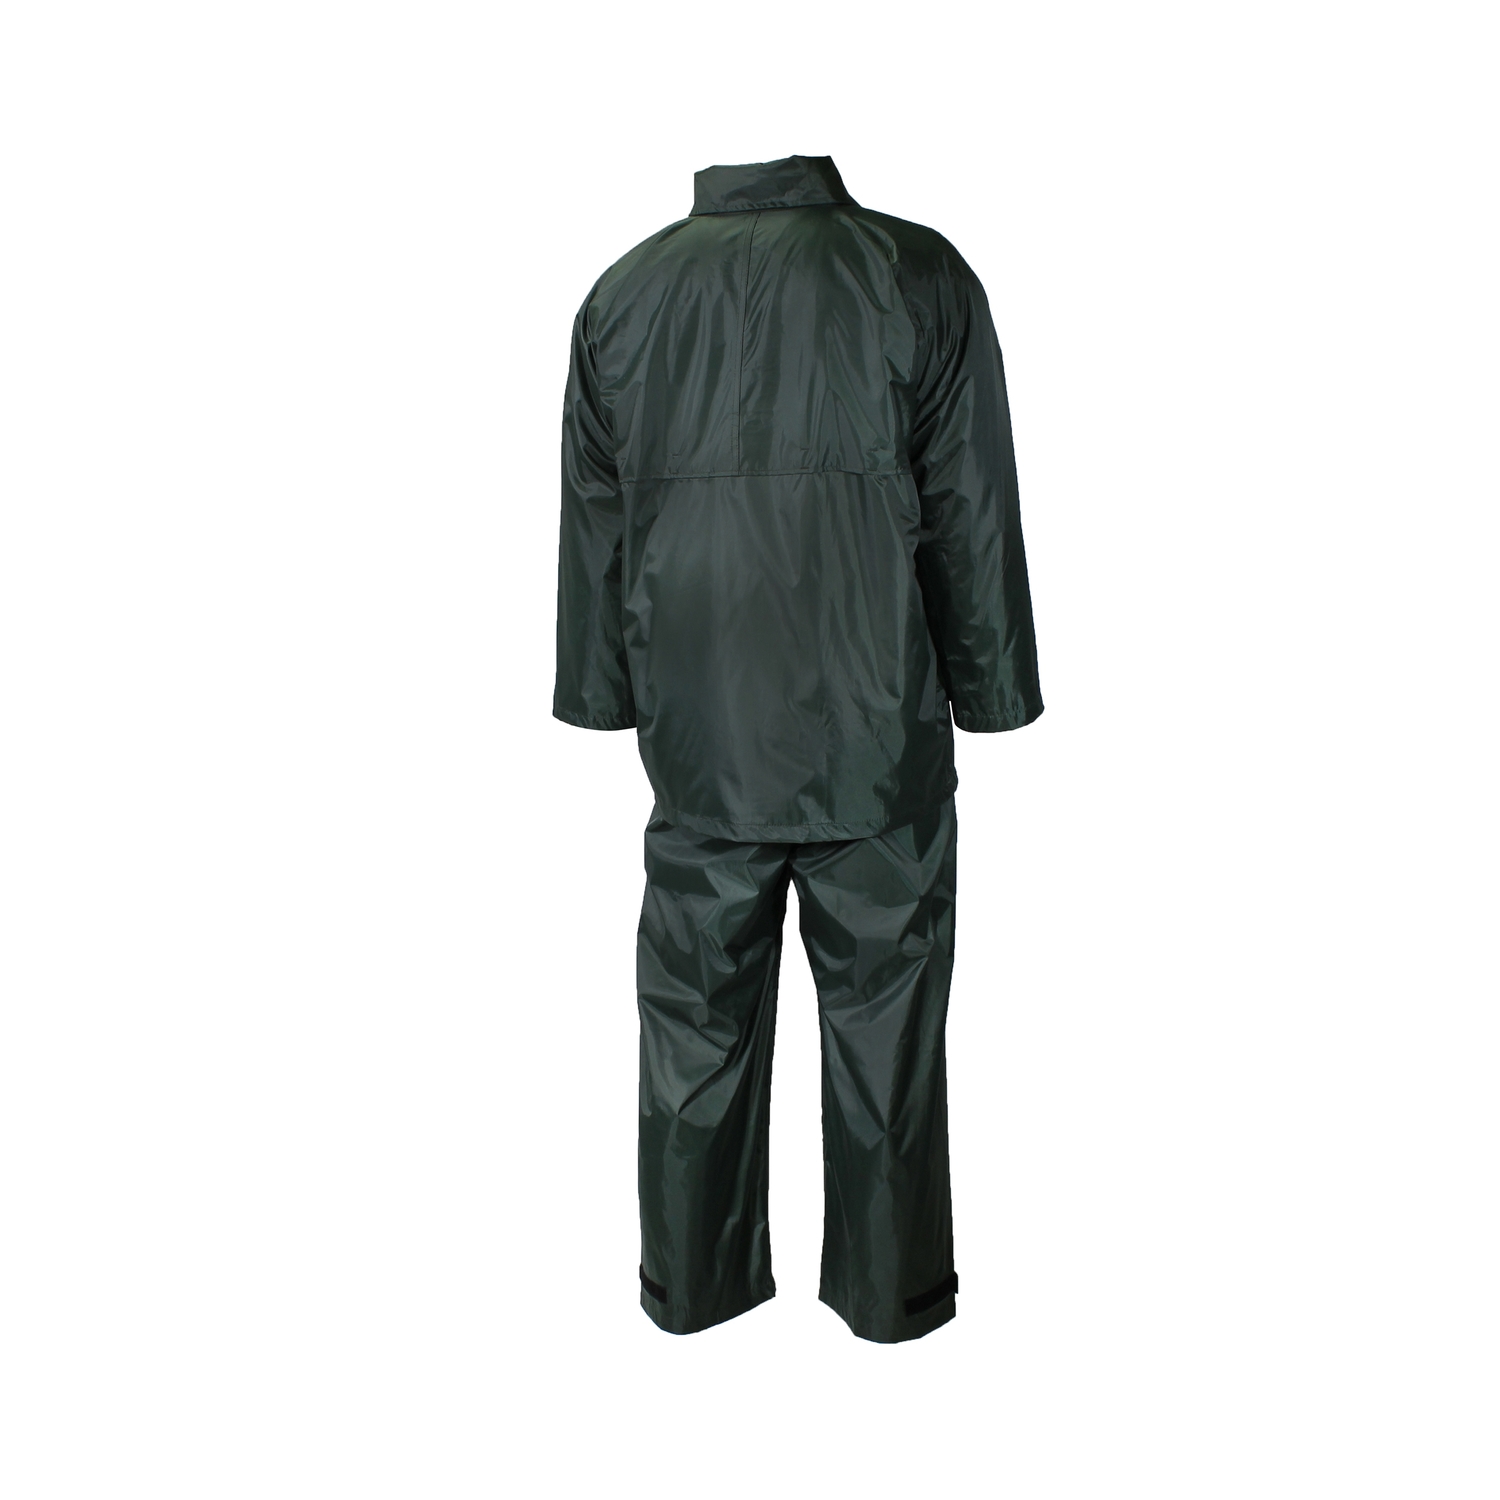 Nylon/pvc breathable rainsuit w/detachable hood